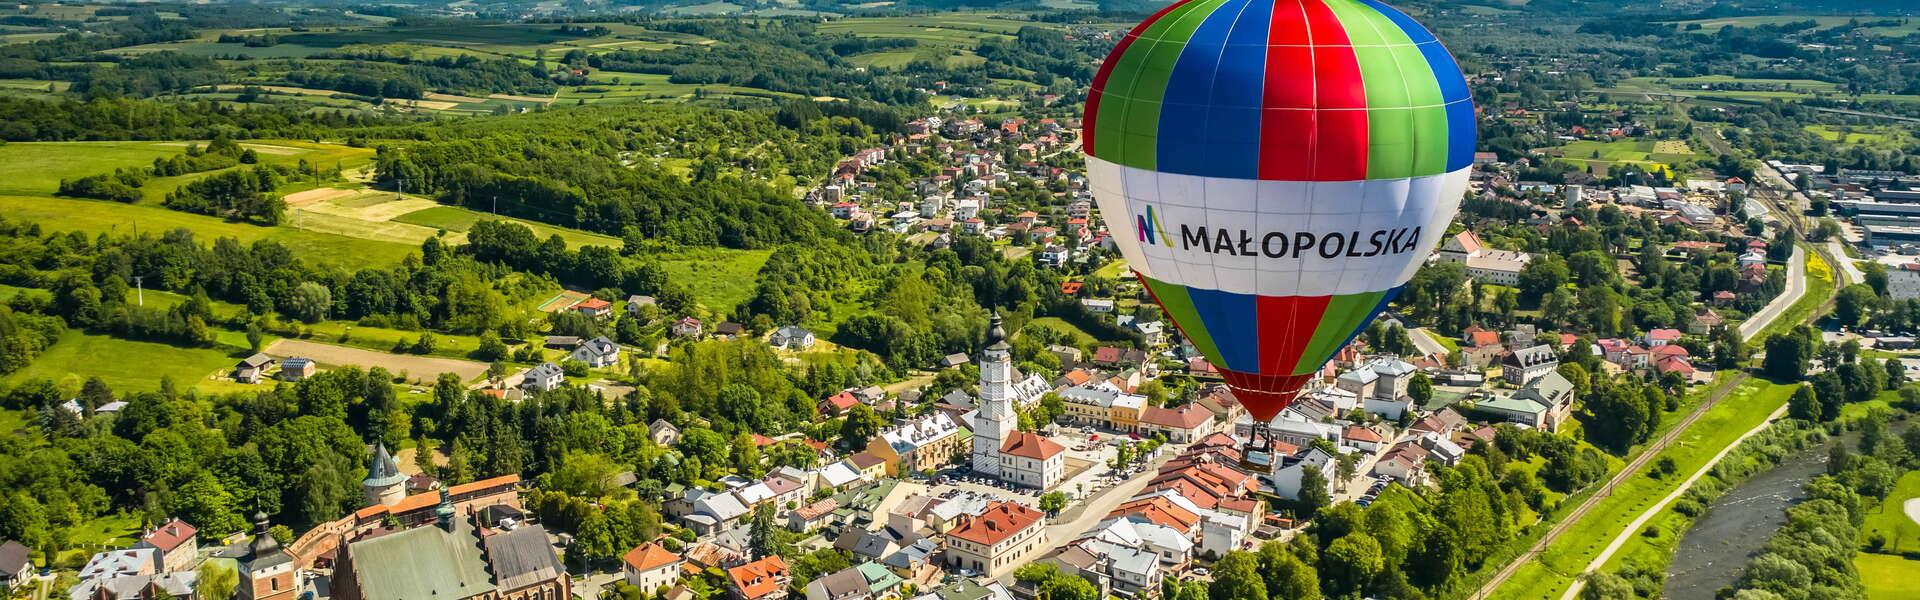 A hot air balloon above the town of Biecz